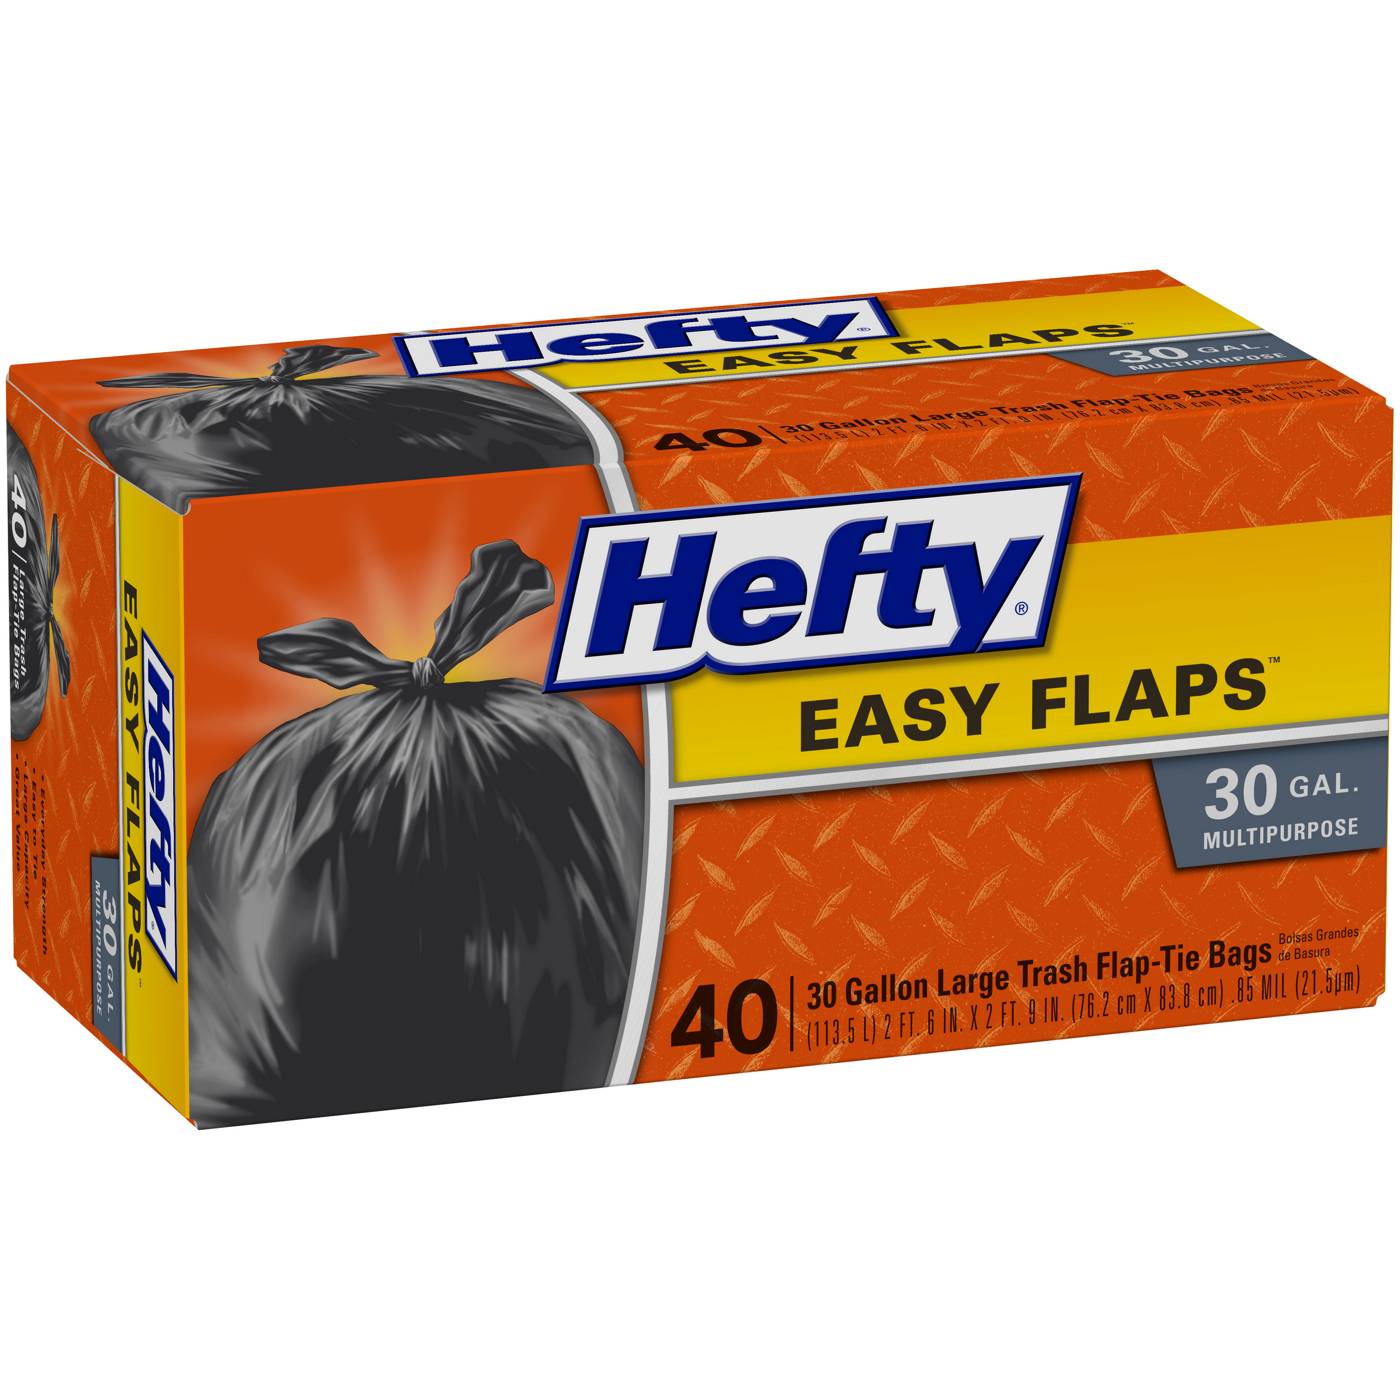 Hefty Flap Tie Small Trash Bags - 30 Pack - White, 4 gal - Harris